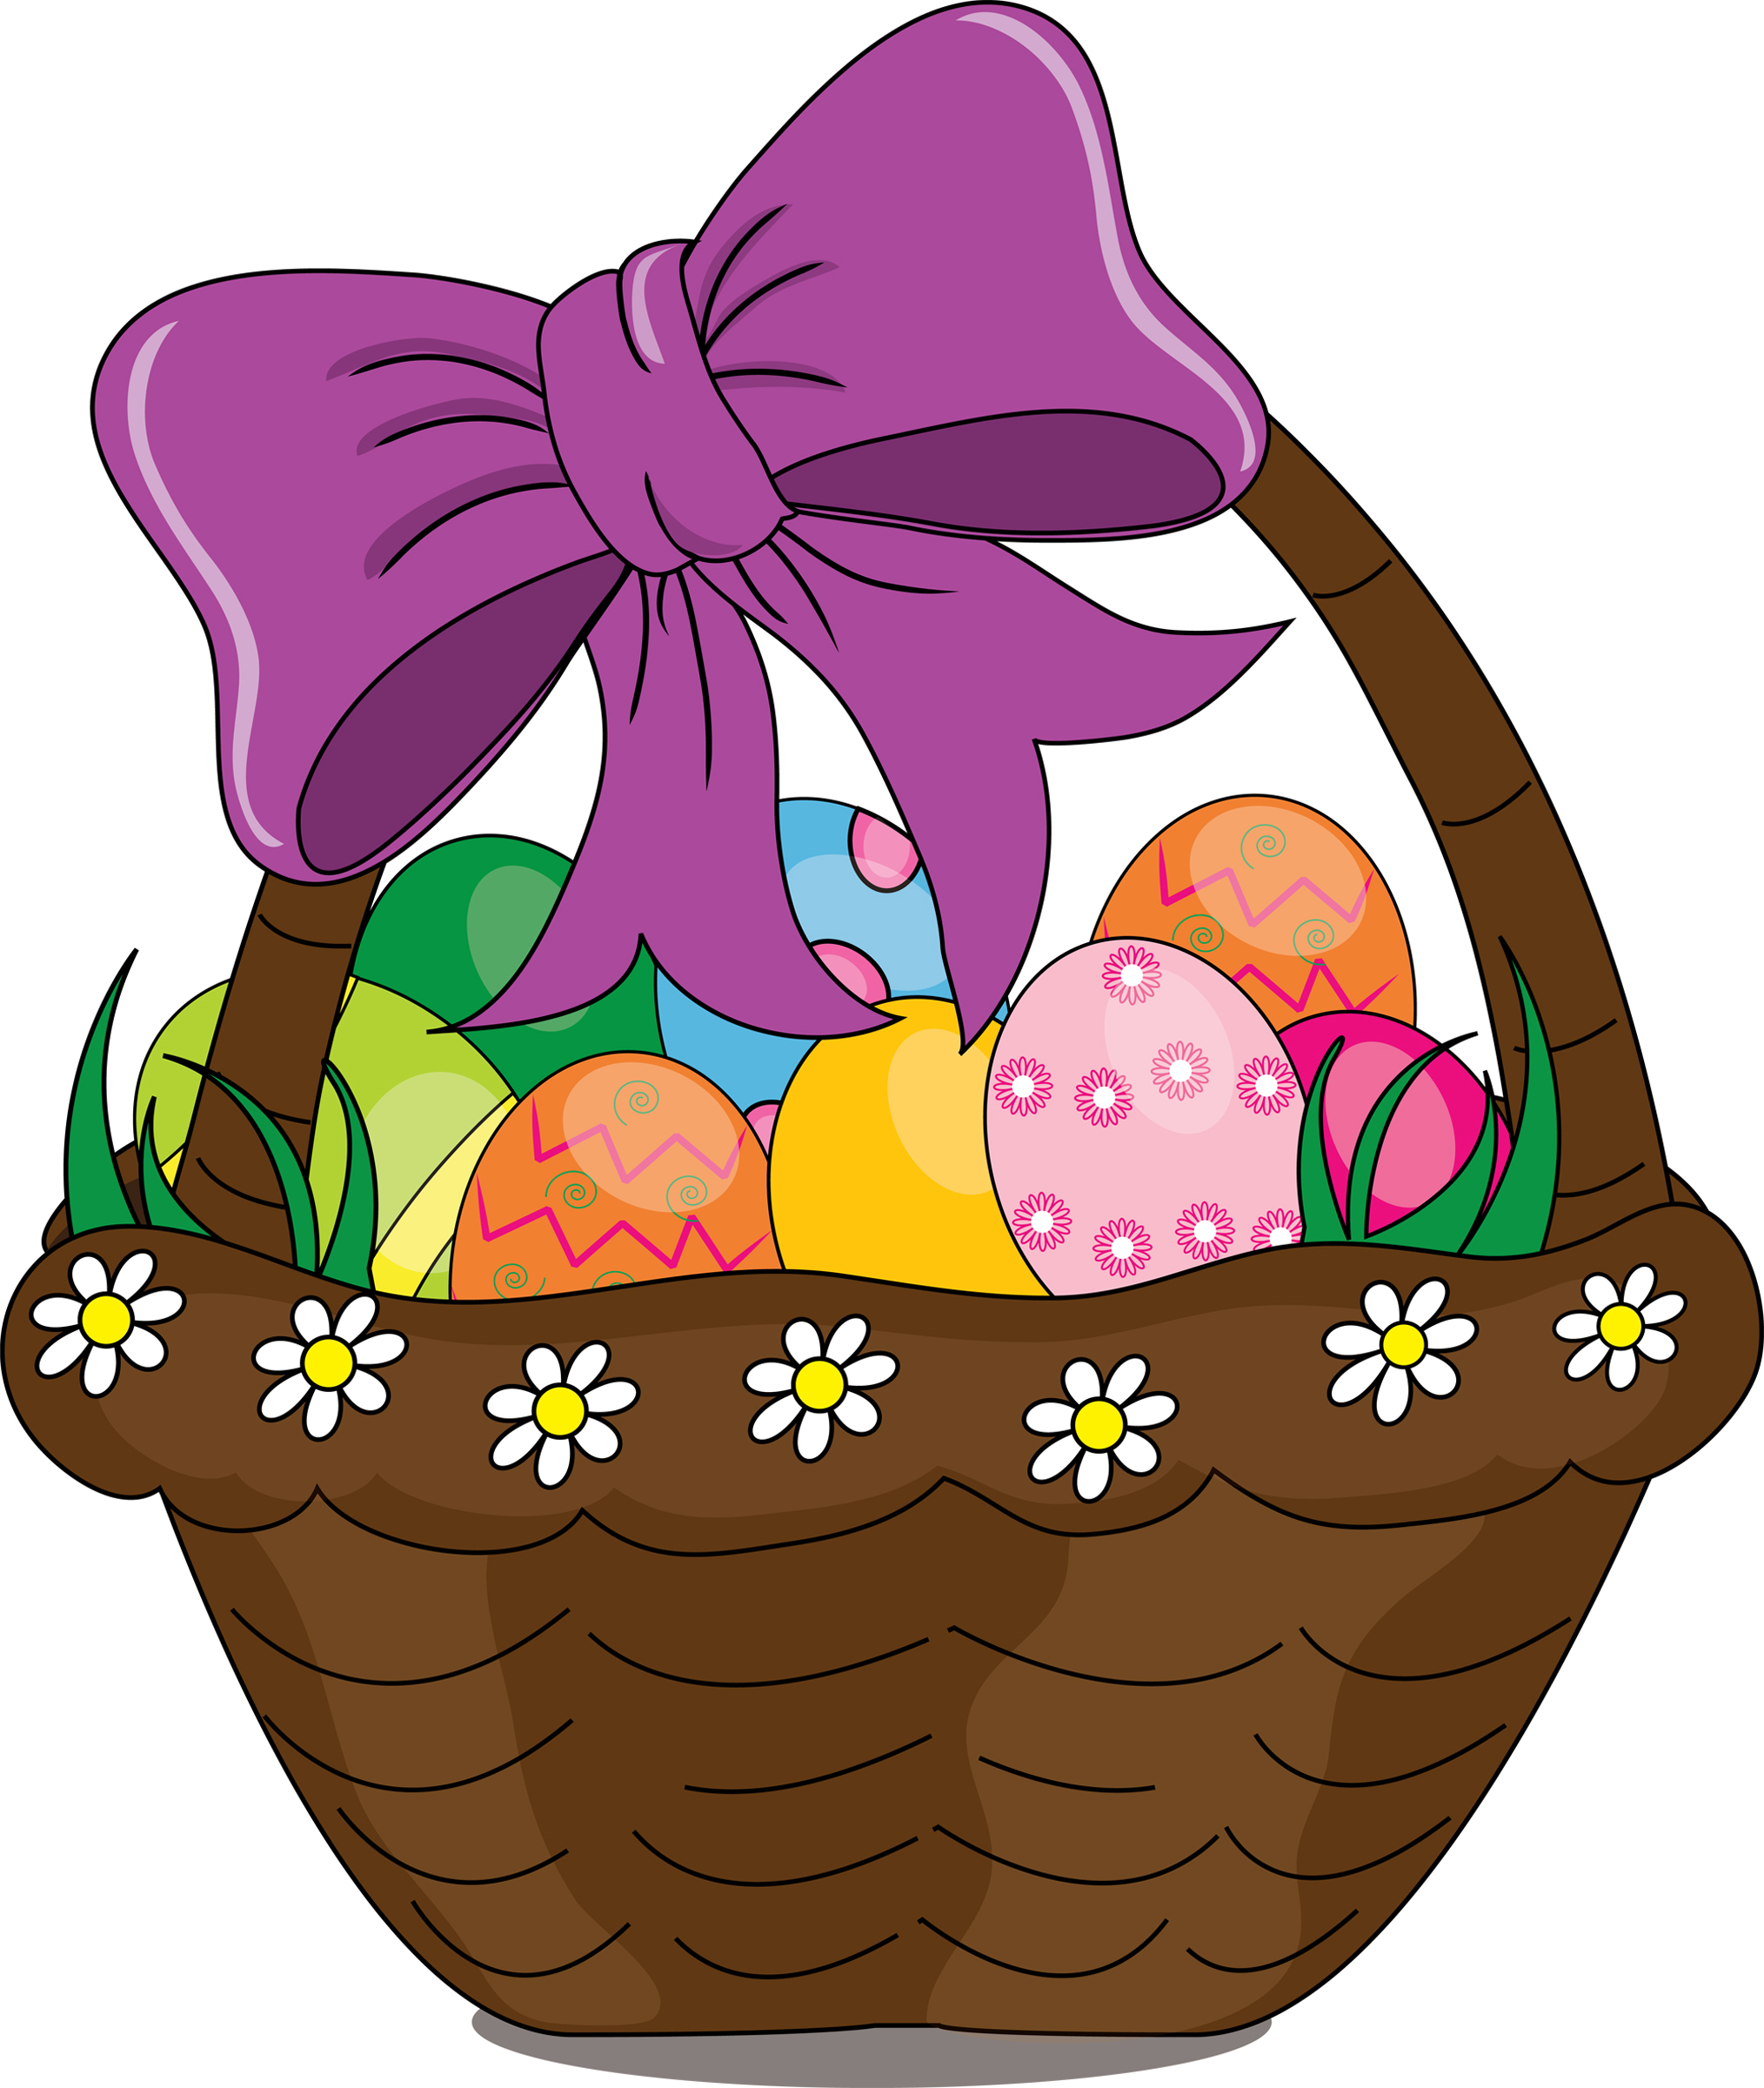 Clip Art Illustration of a Cartoon Easter Basket | WV Family Online